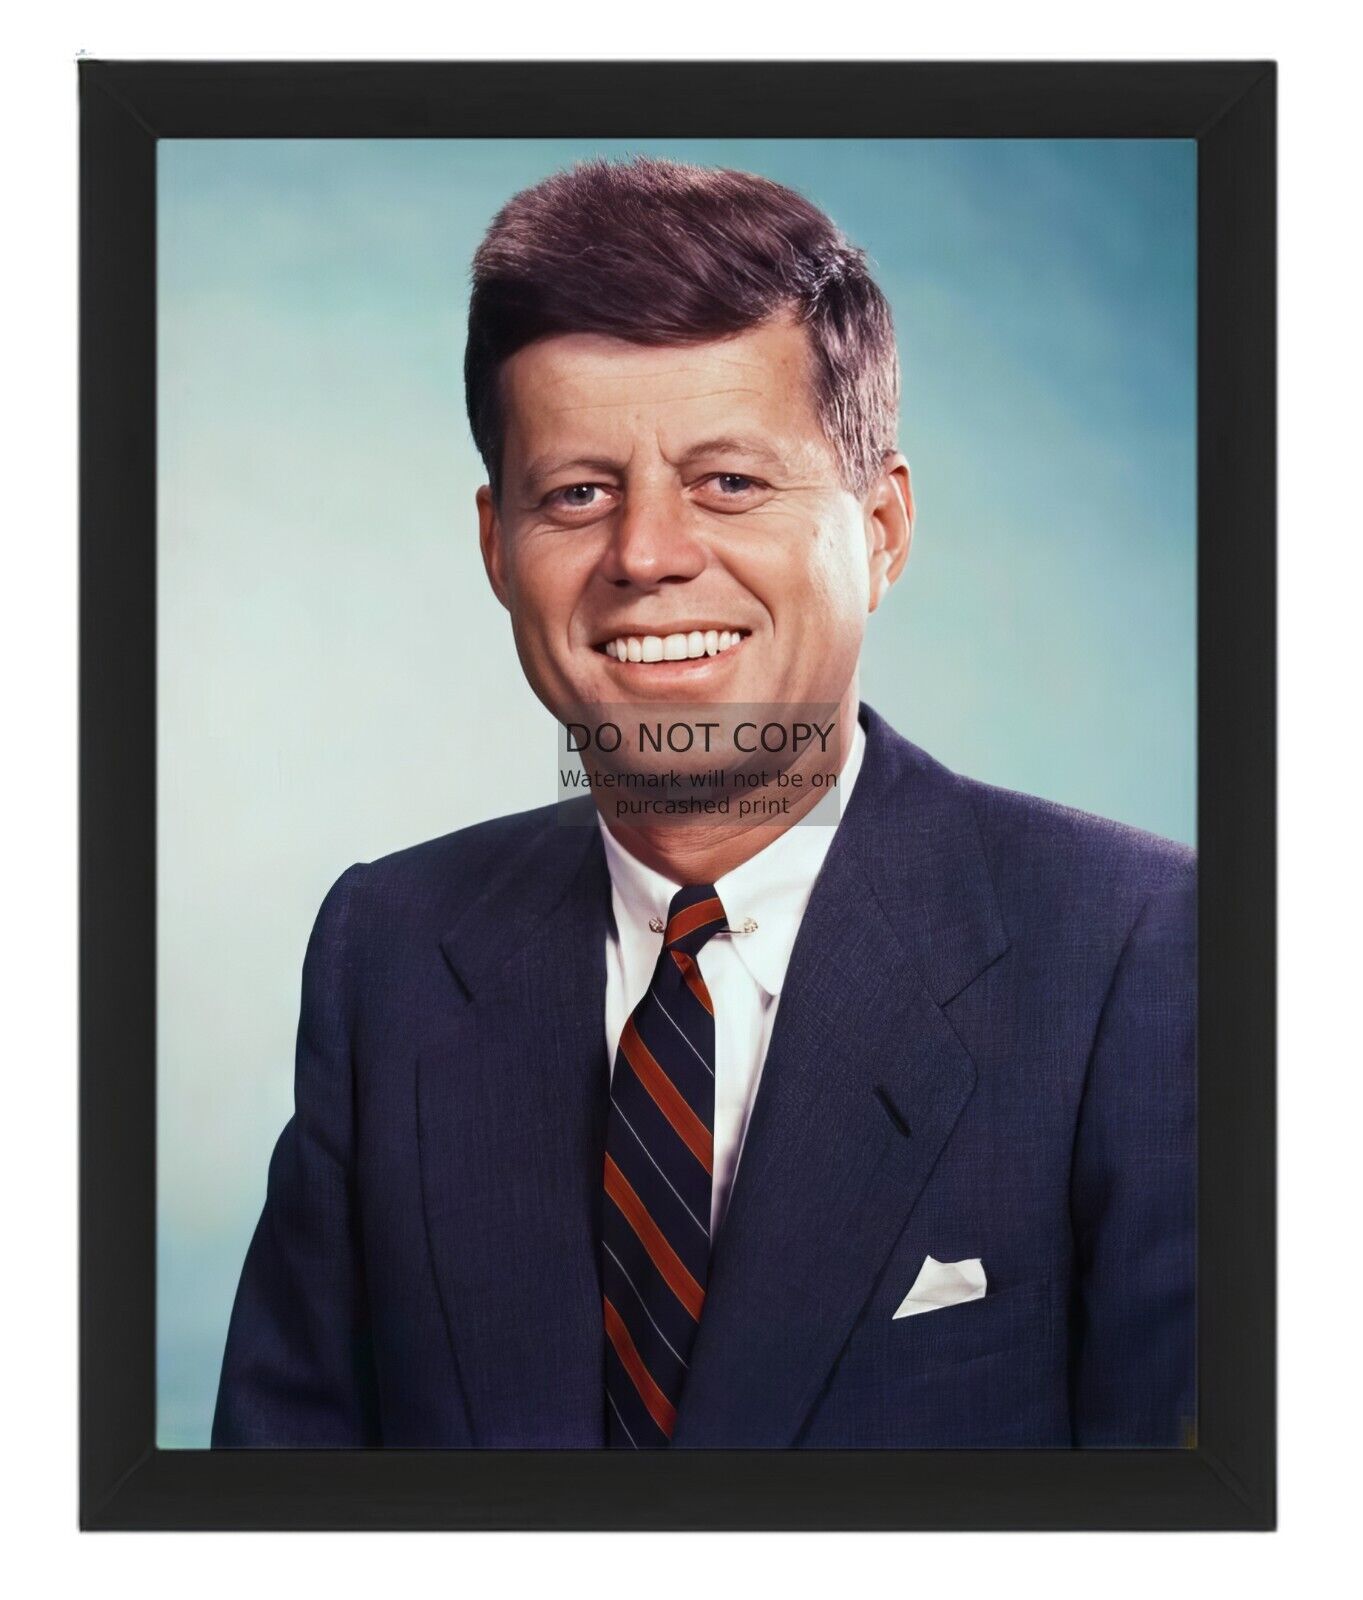 PRESIDENT JOHN F. KENNEDY OF THE USA SMILING PORTRAIT 8X10 FRAMED PHOTO